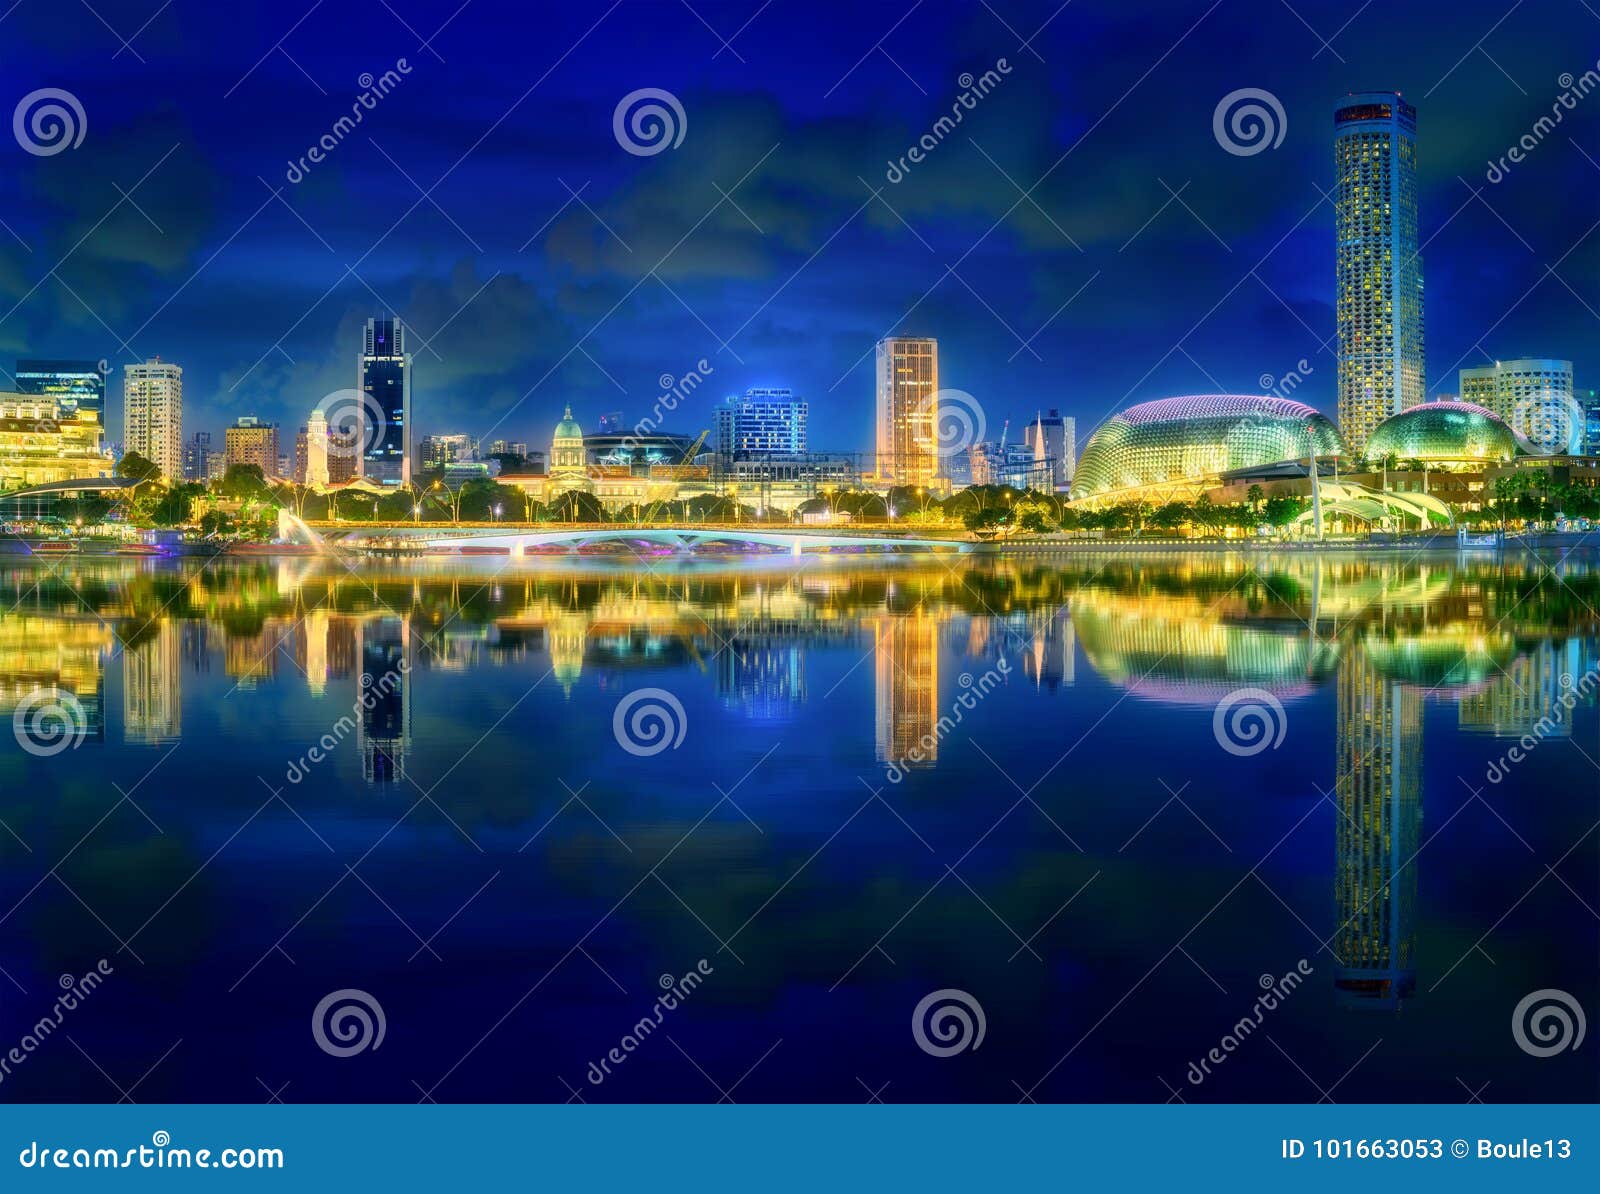 Singapore skyline background. Vibrant panorama background of Singapore skyline at the business bay